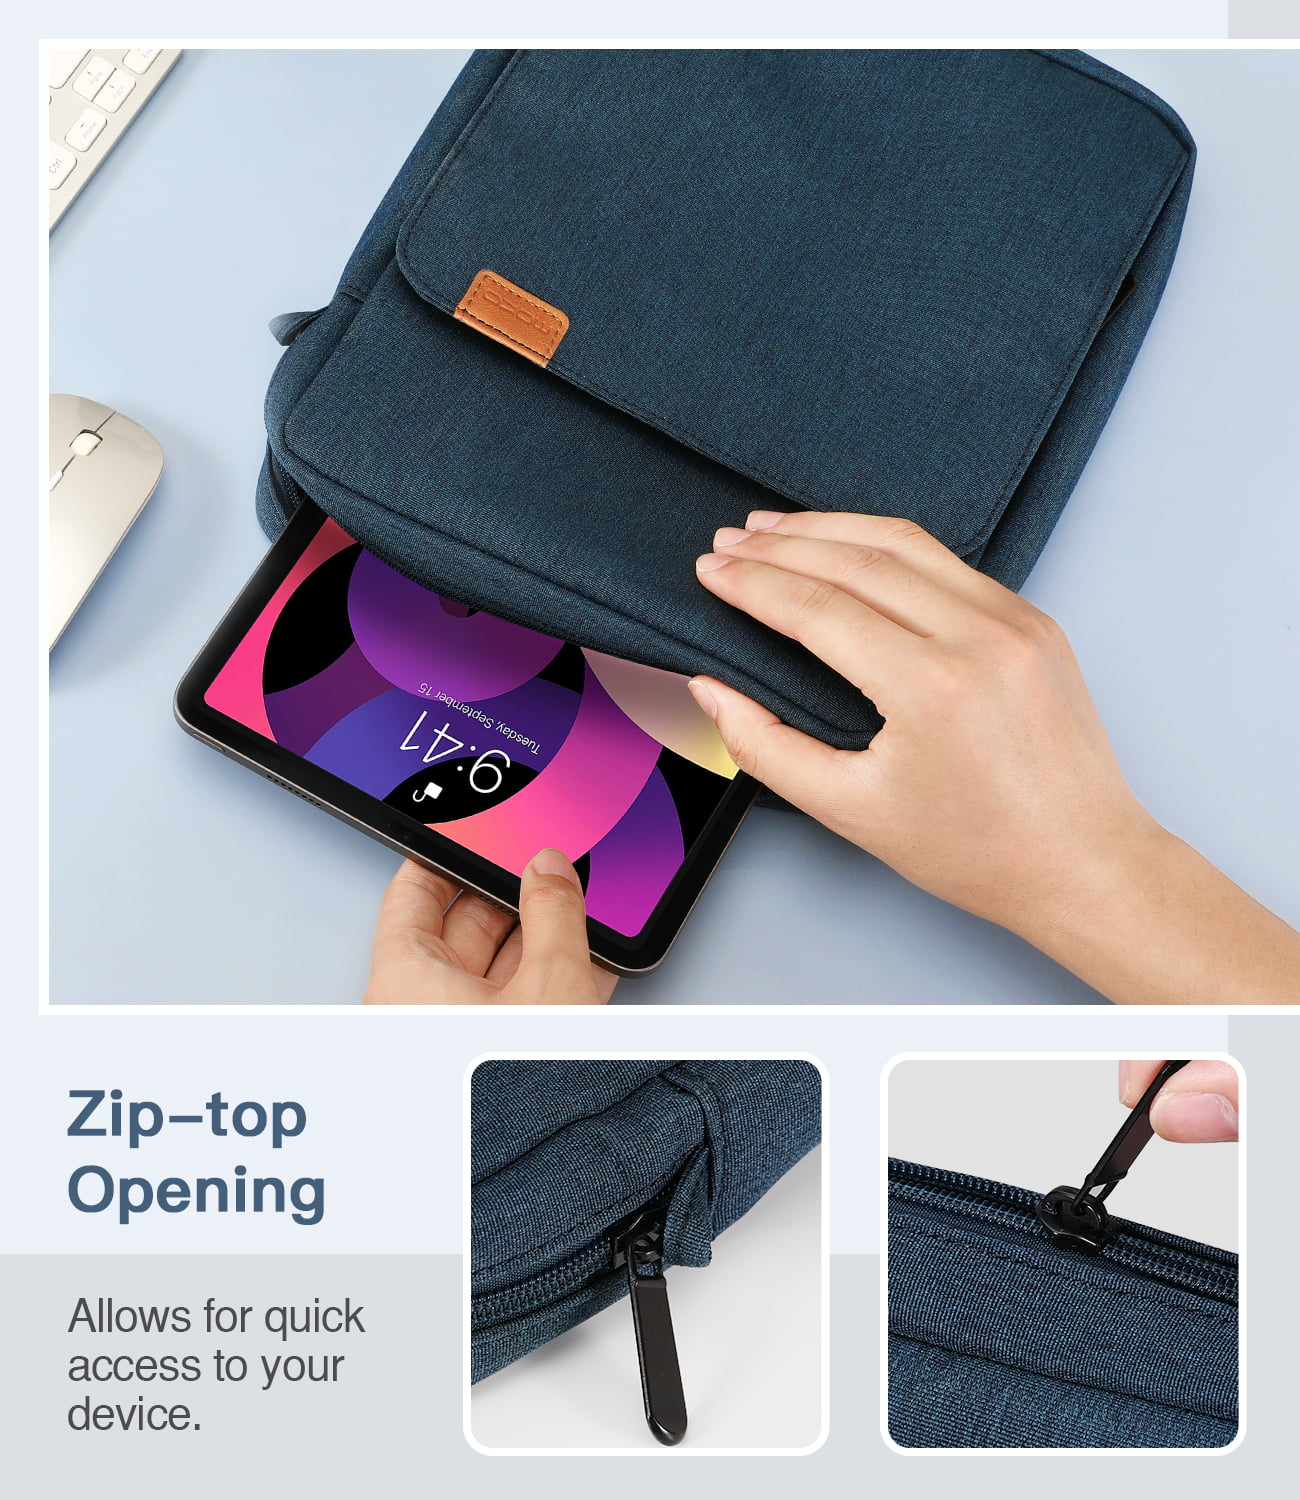 Tablet sleeve iPad mini belt pouch holster URBAN TOOL® slyfox cover